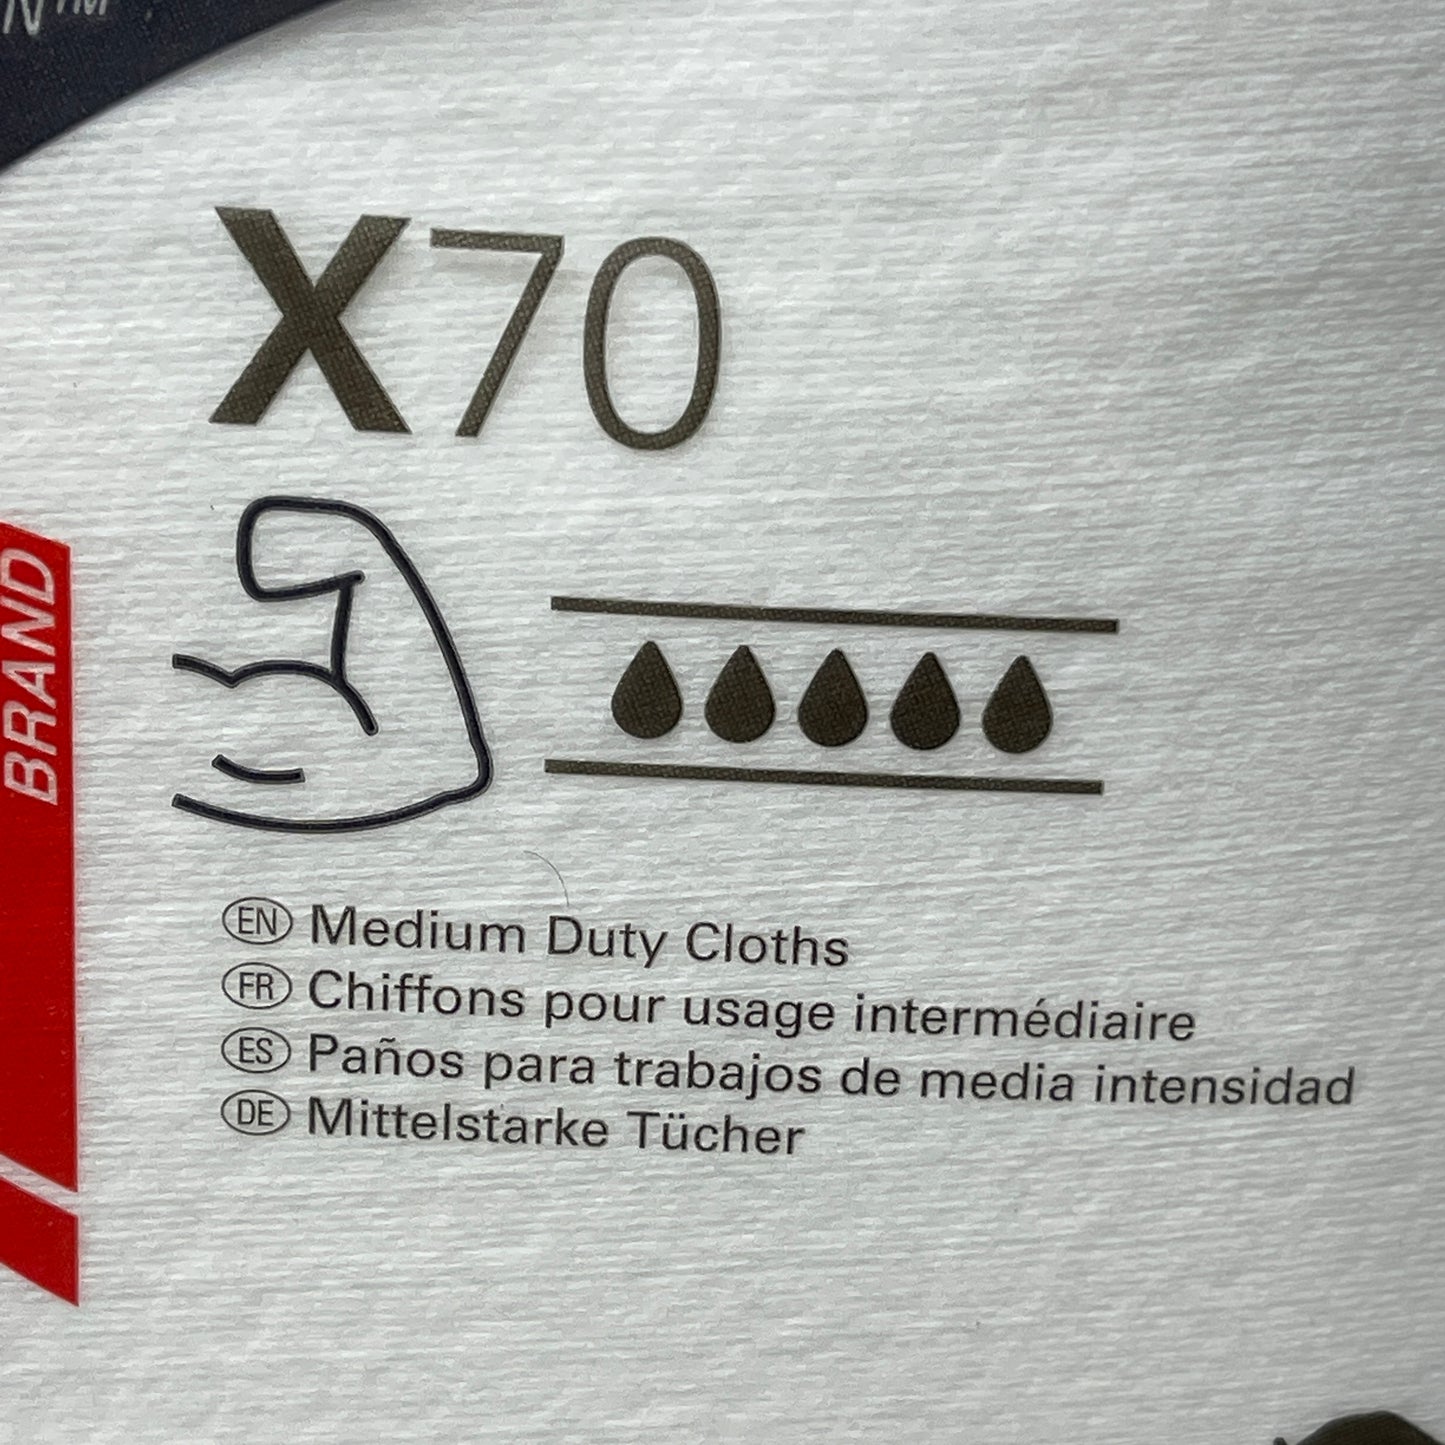 Kimberly-Clark Lot Of 12 Medium Duty Cloths 76 Count X70 41200 8387